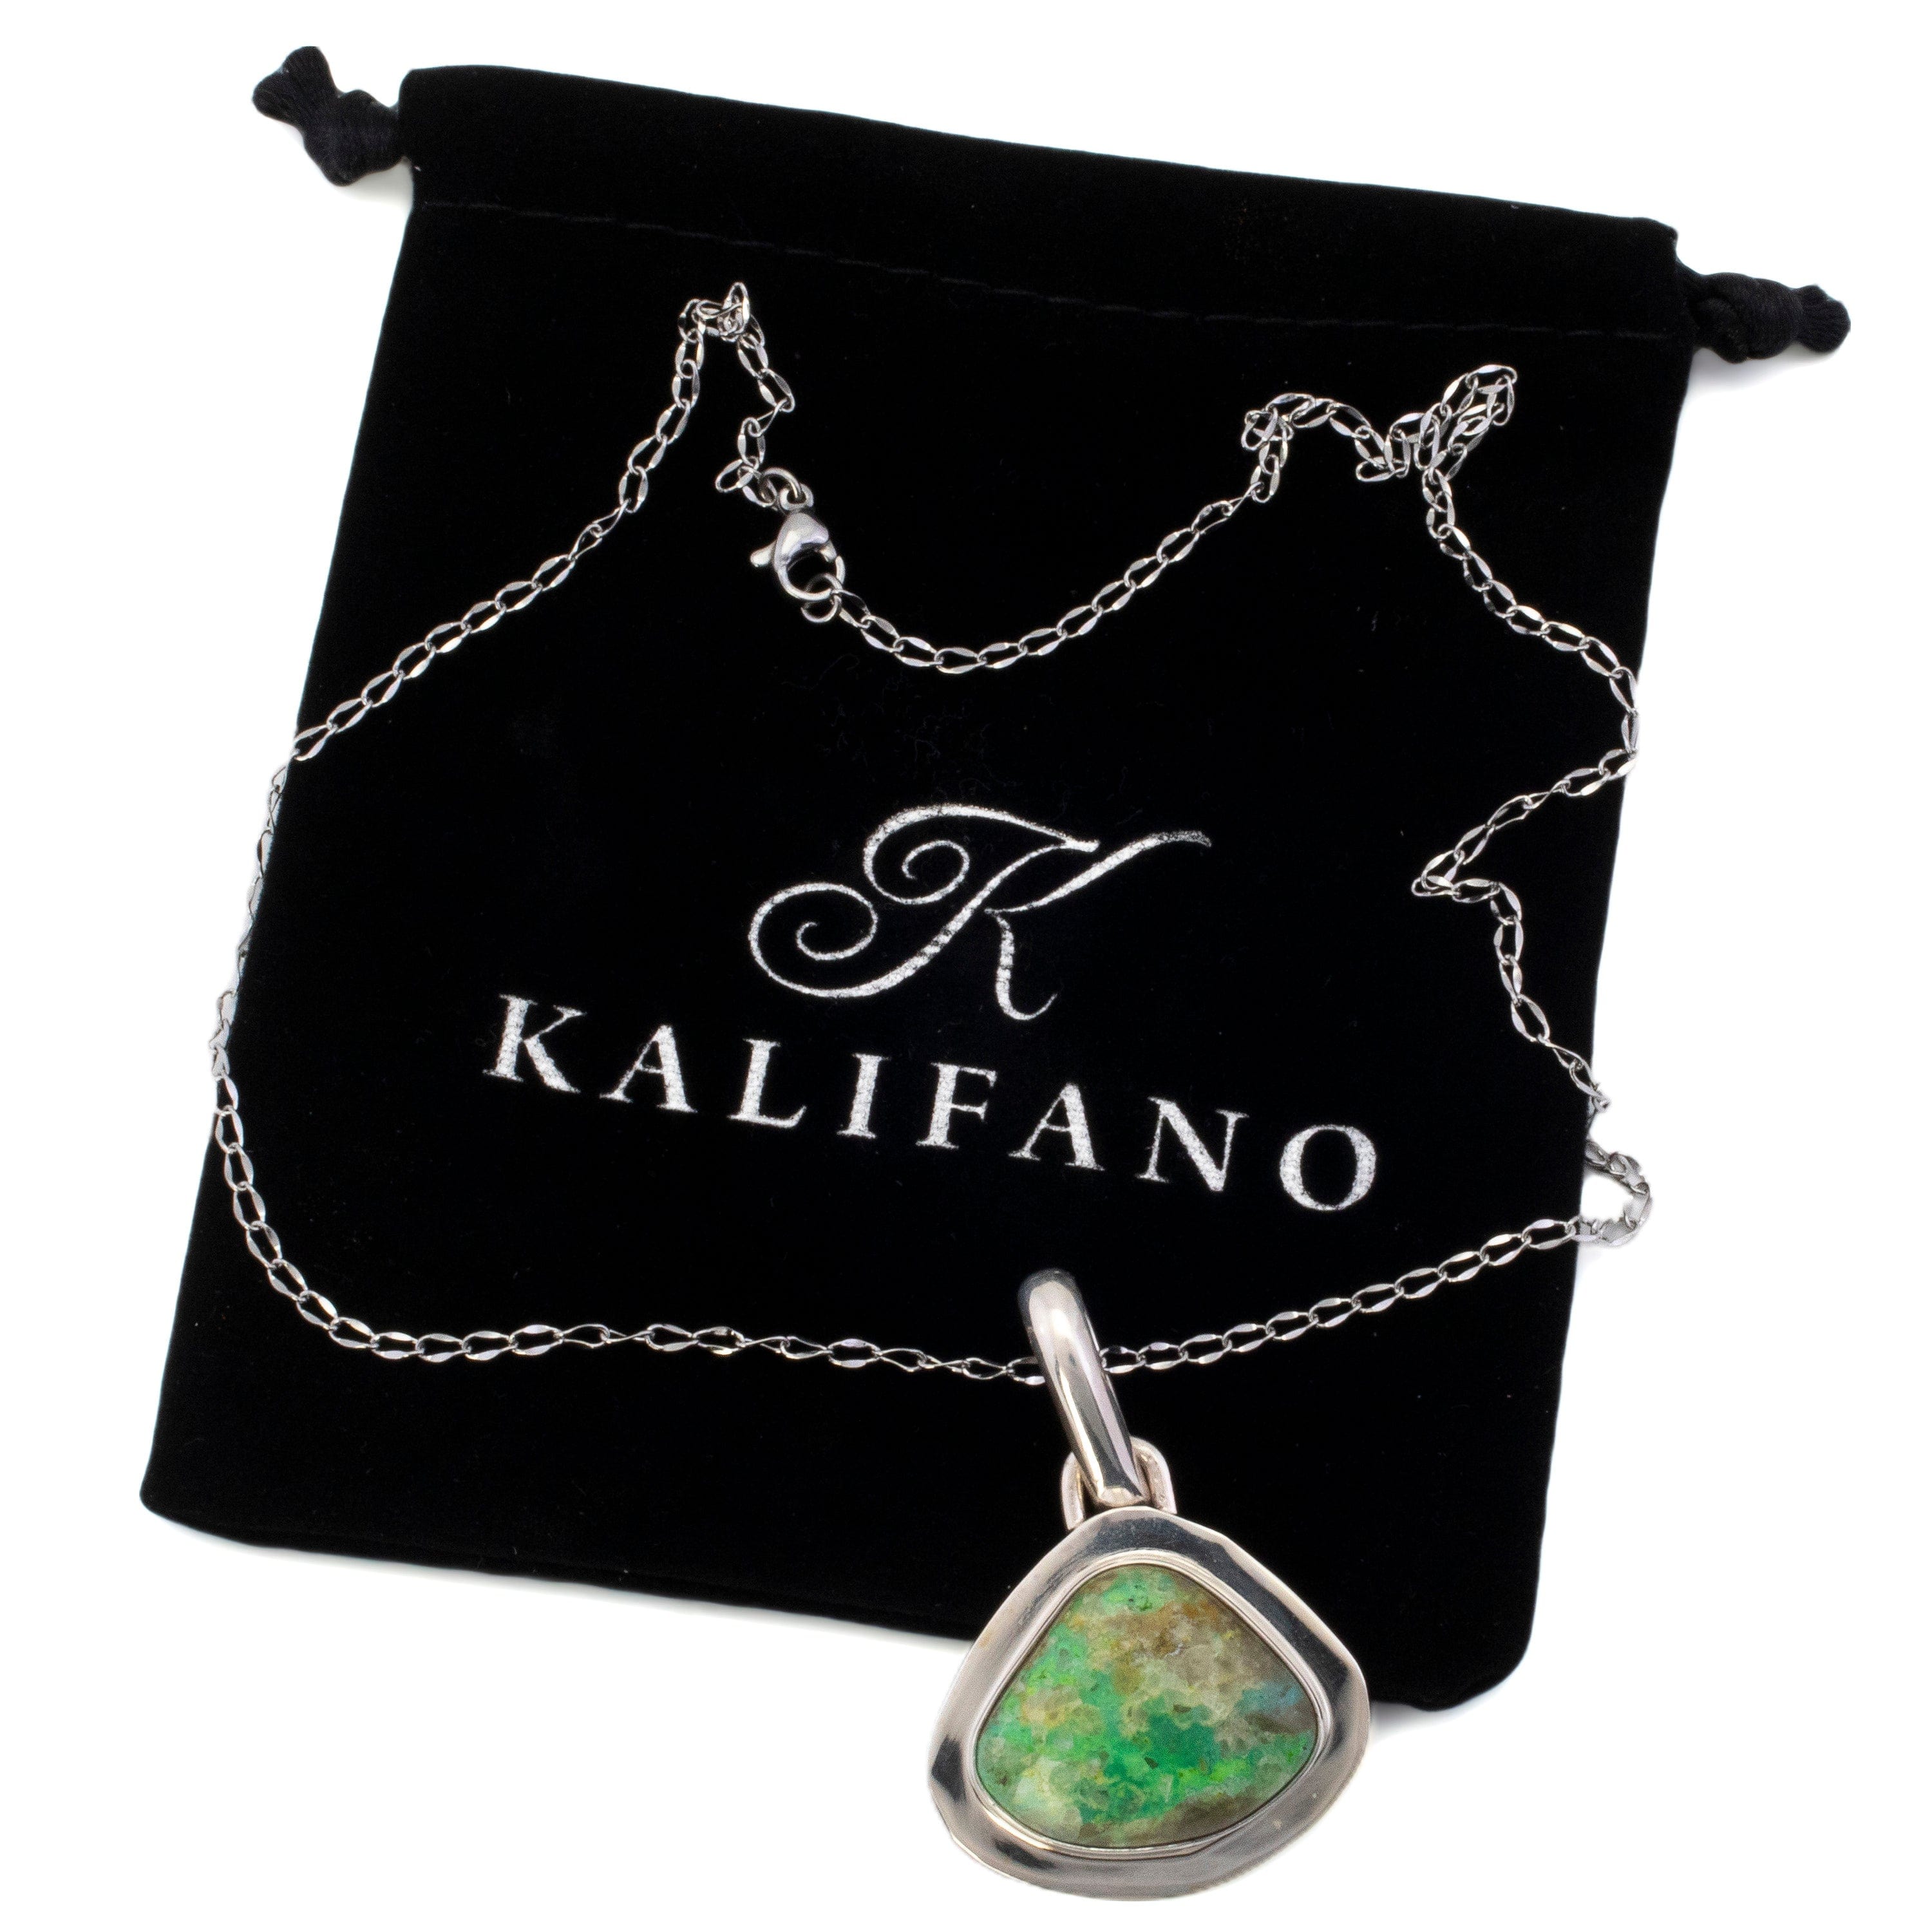 Kalifano Southwest Silver Jewelry Kingman Turquoise USA Handmade 925 Sterling Silver Pendant NMN450.002